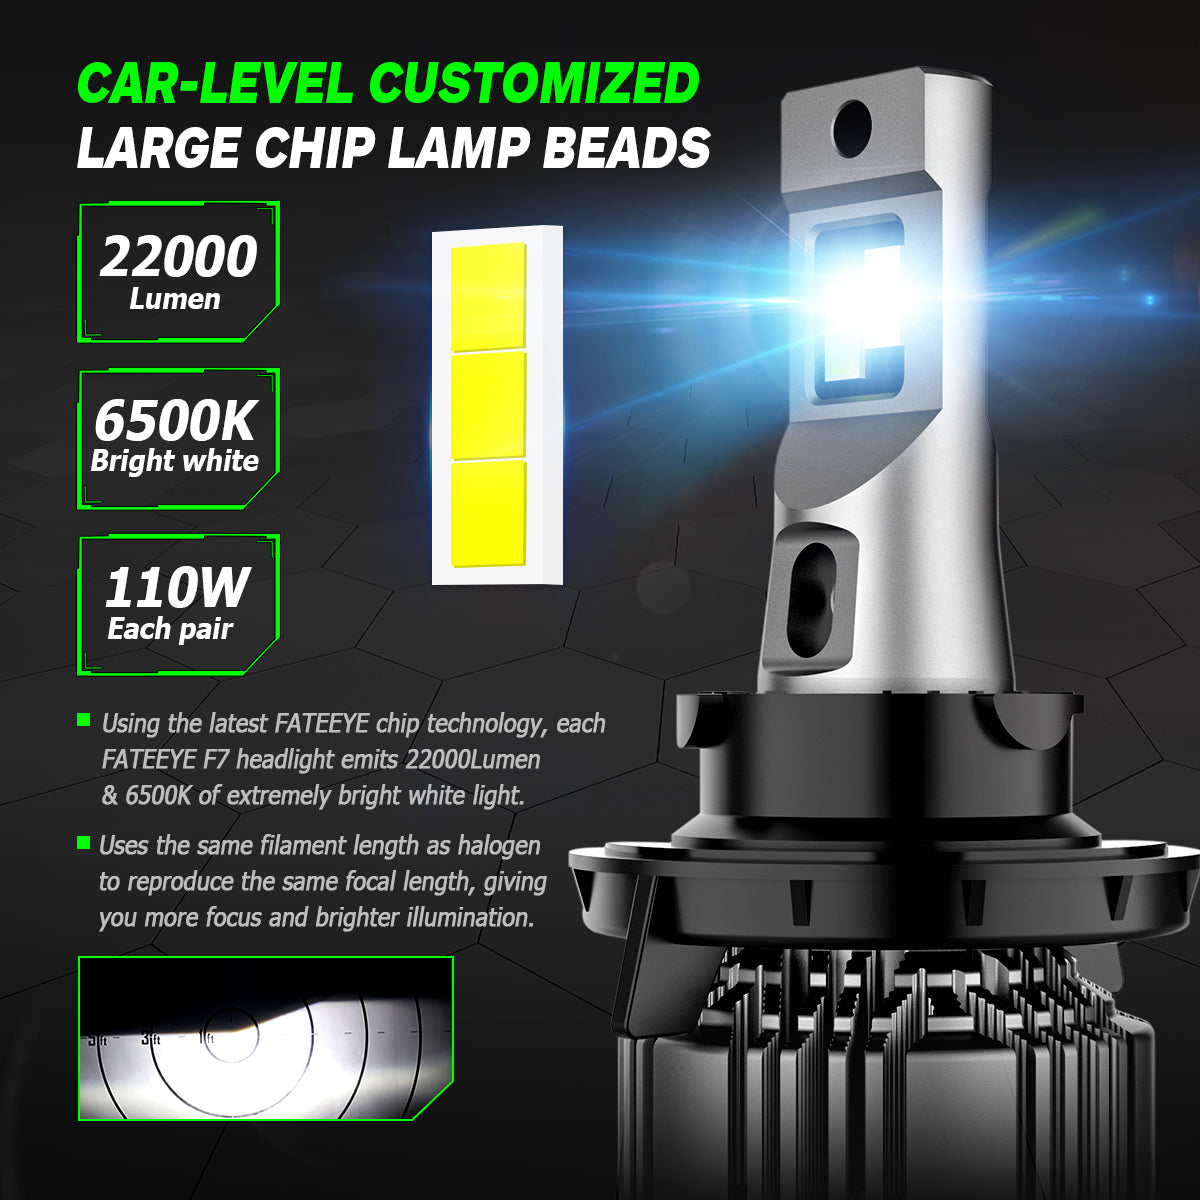 FATEEYE A700-F1-H4 LED HEADLIGHT 50W 10000LUMENS 6500K AUTOMOTIVE LIGHTS